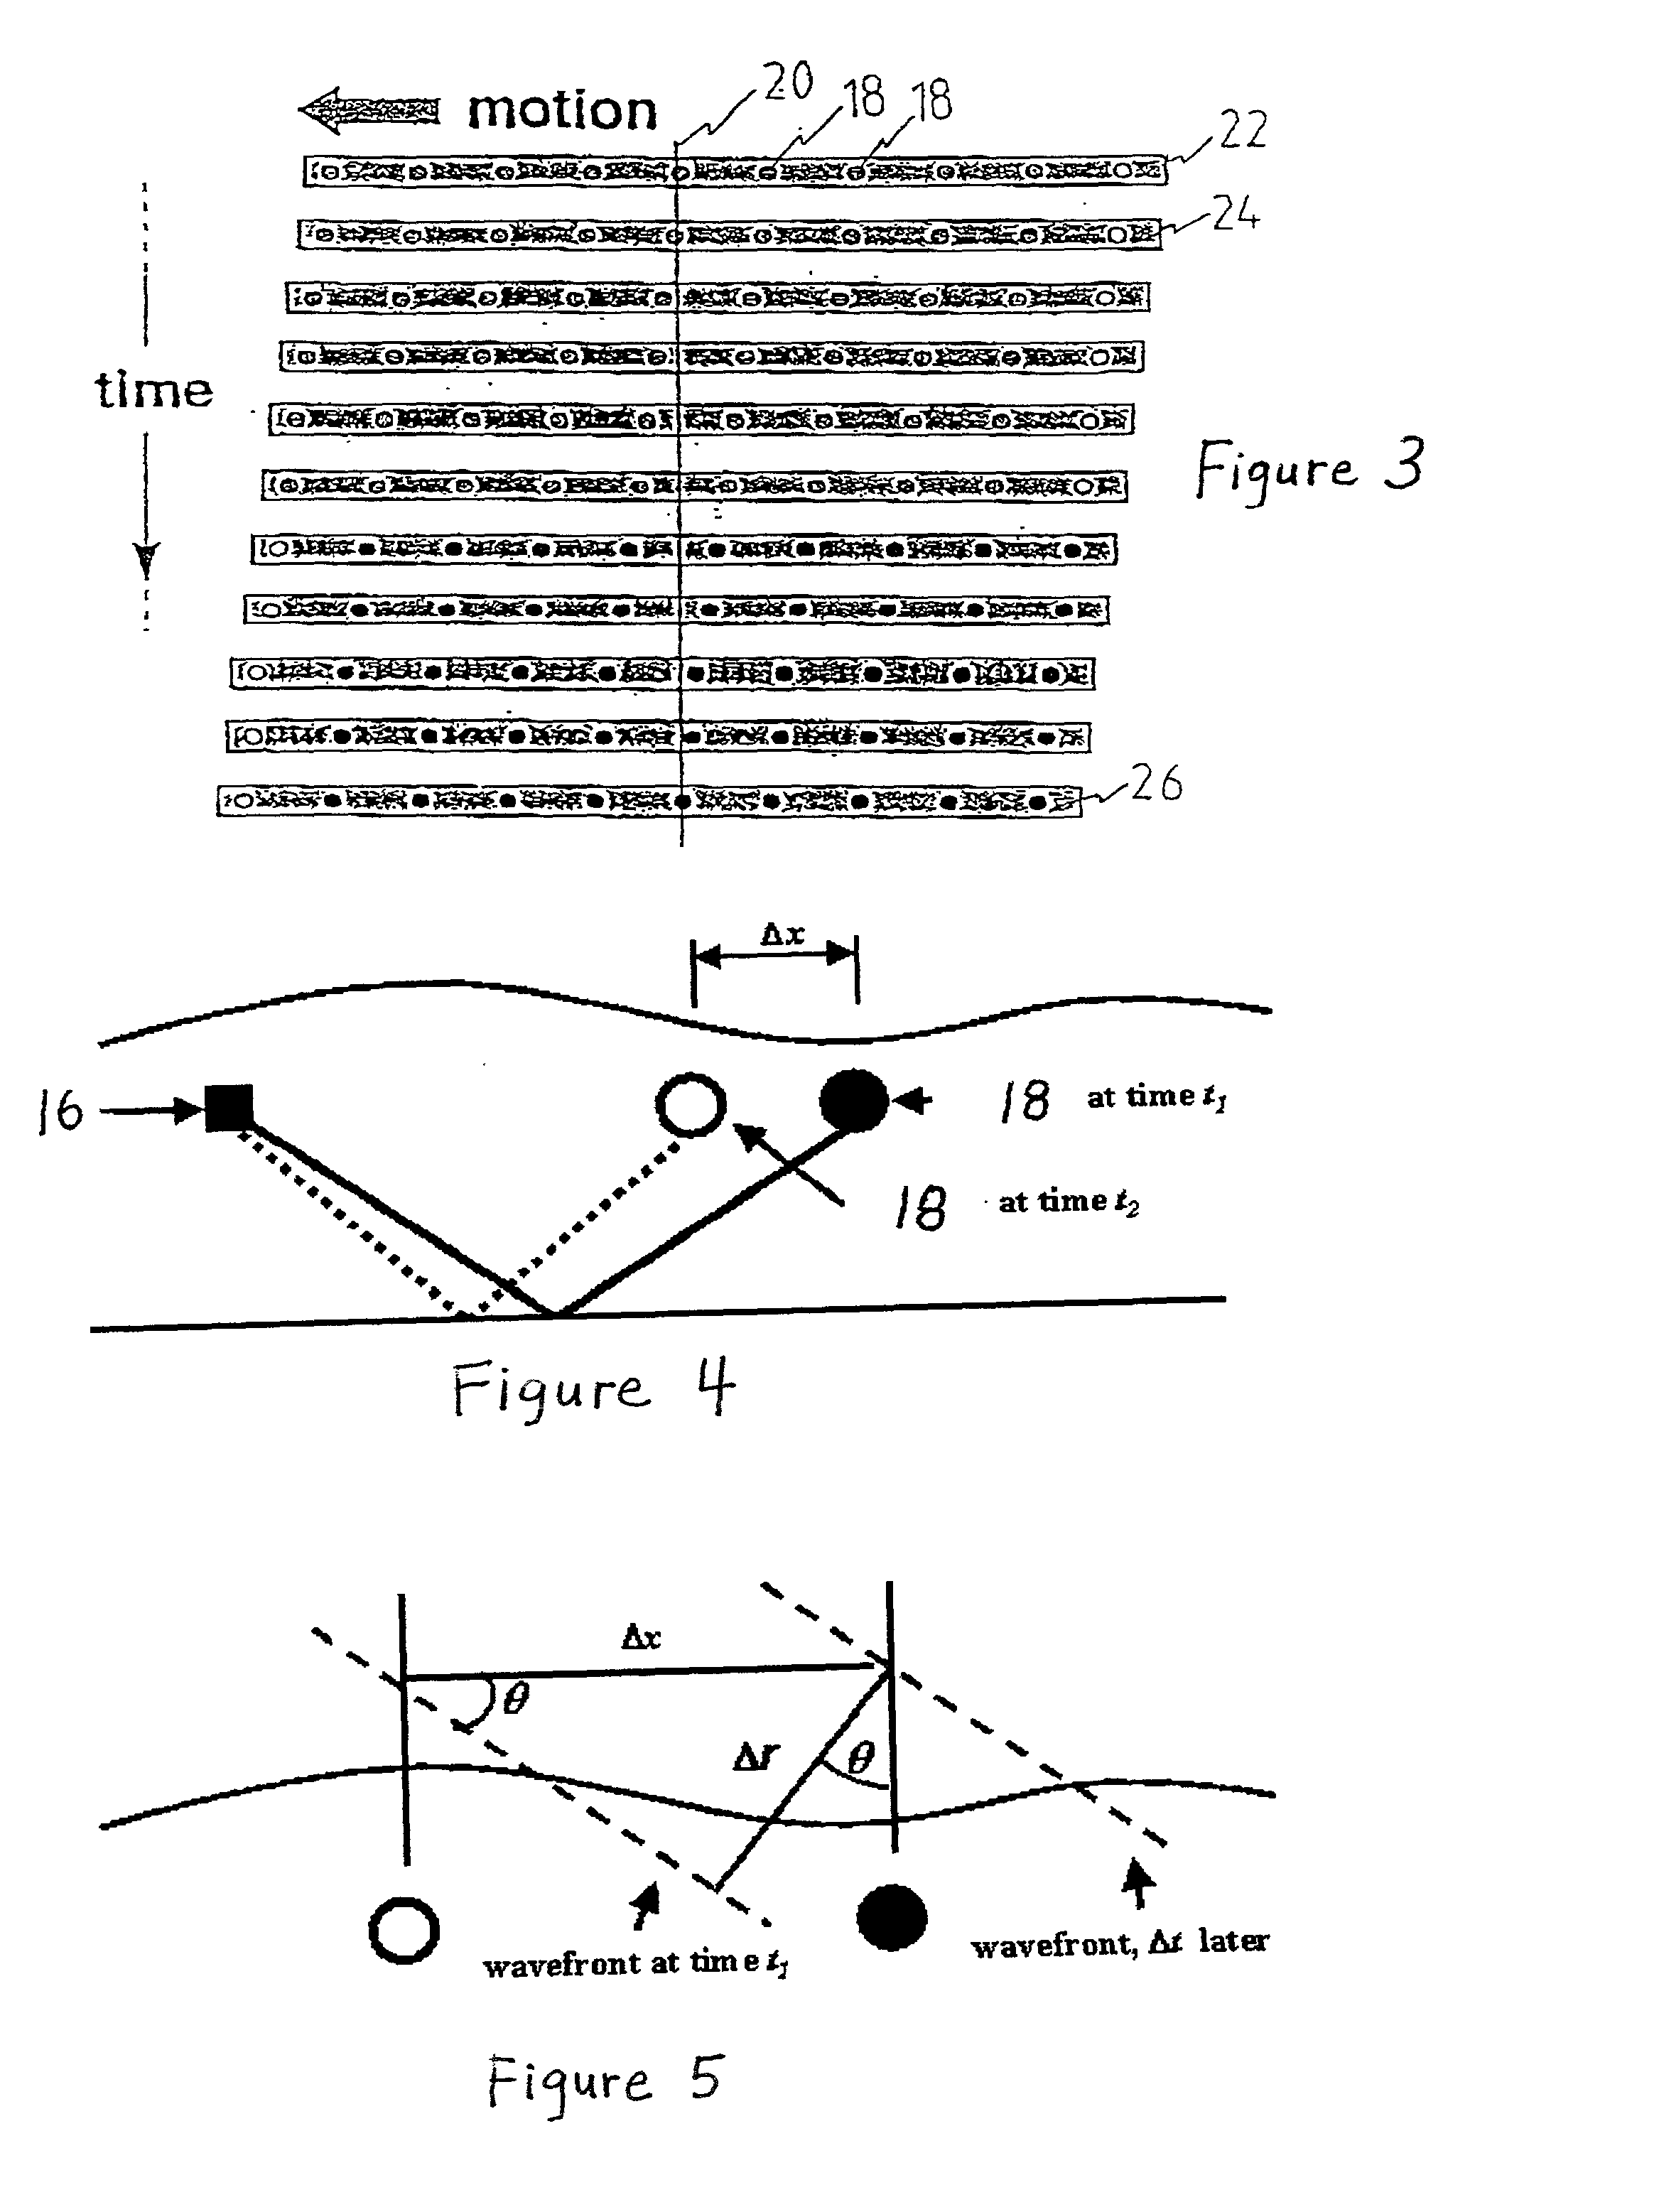 Seismic receiver motion compensation